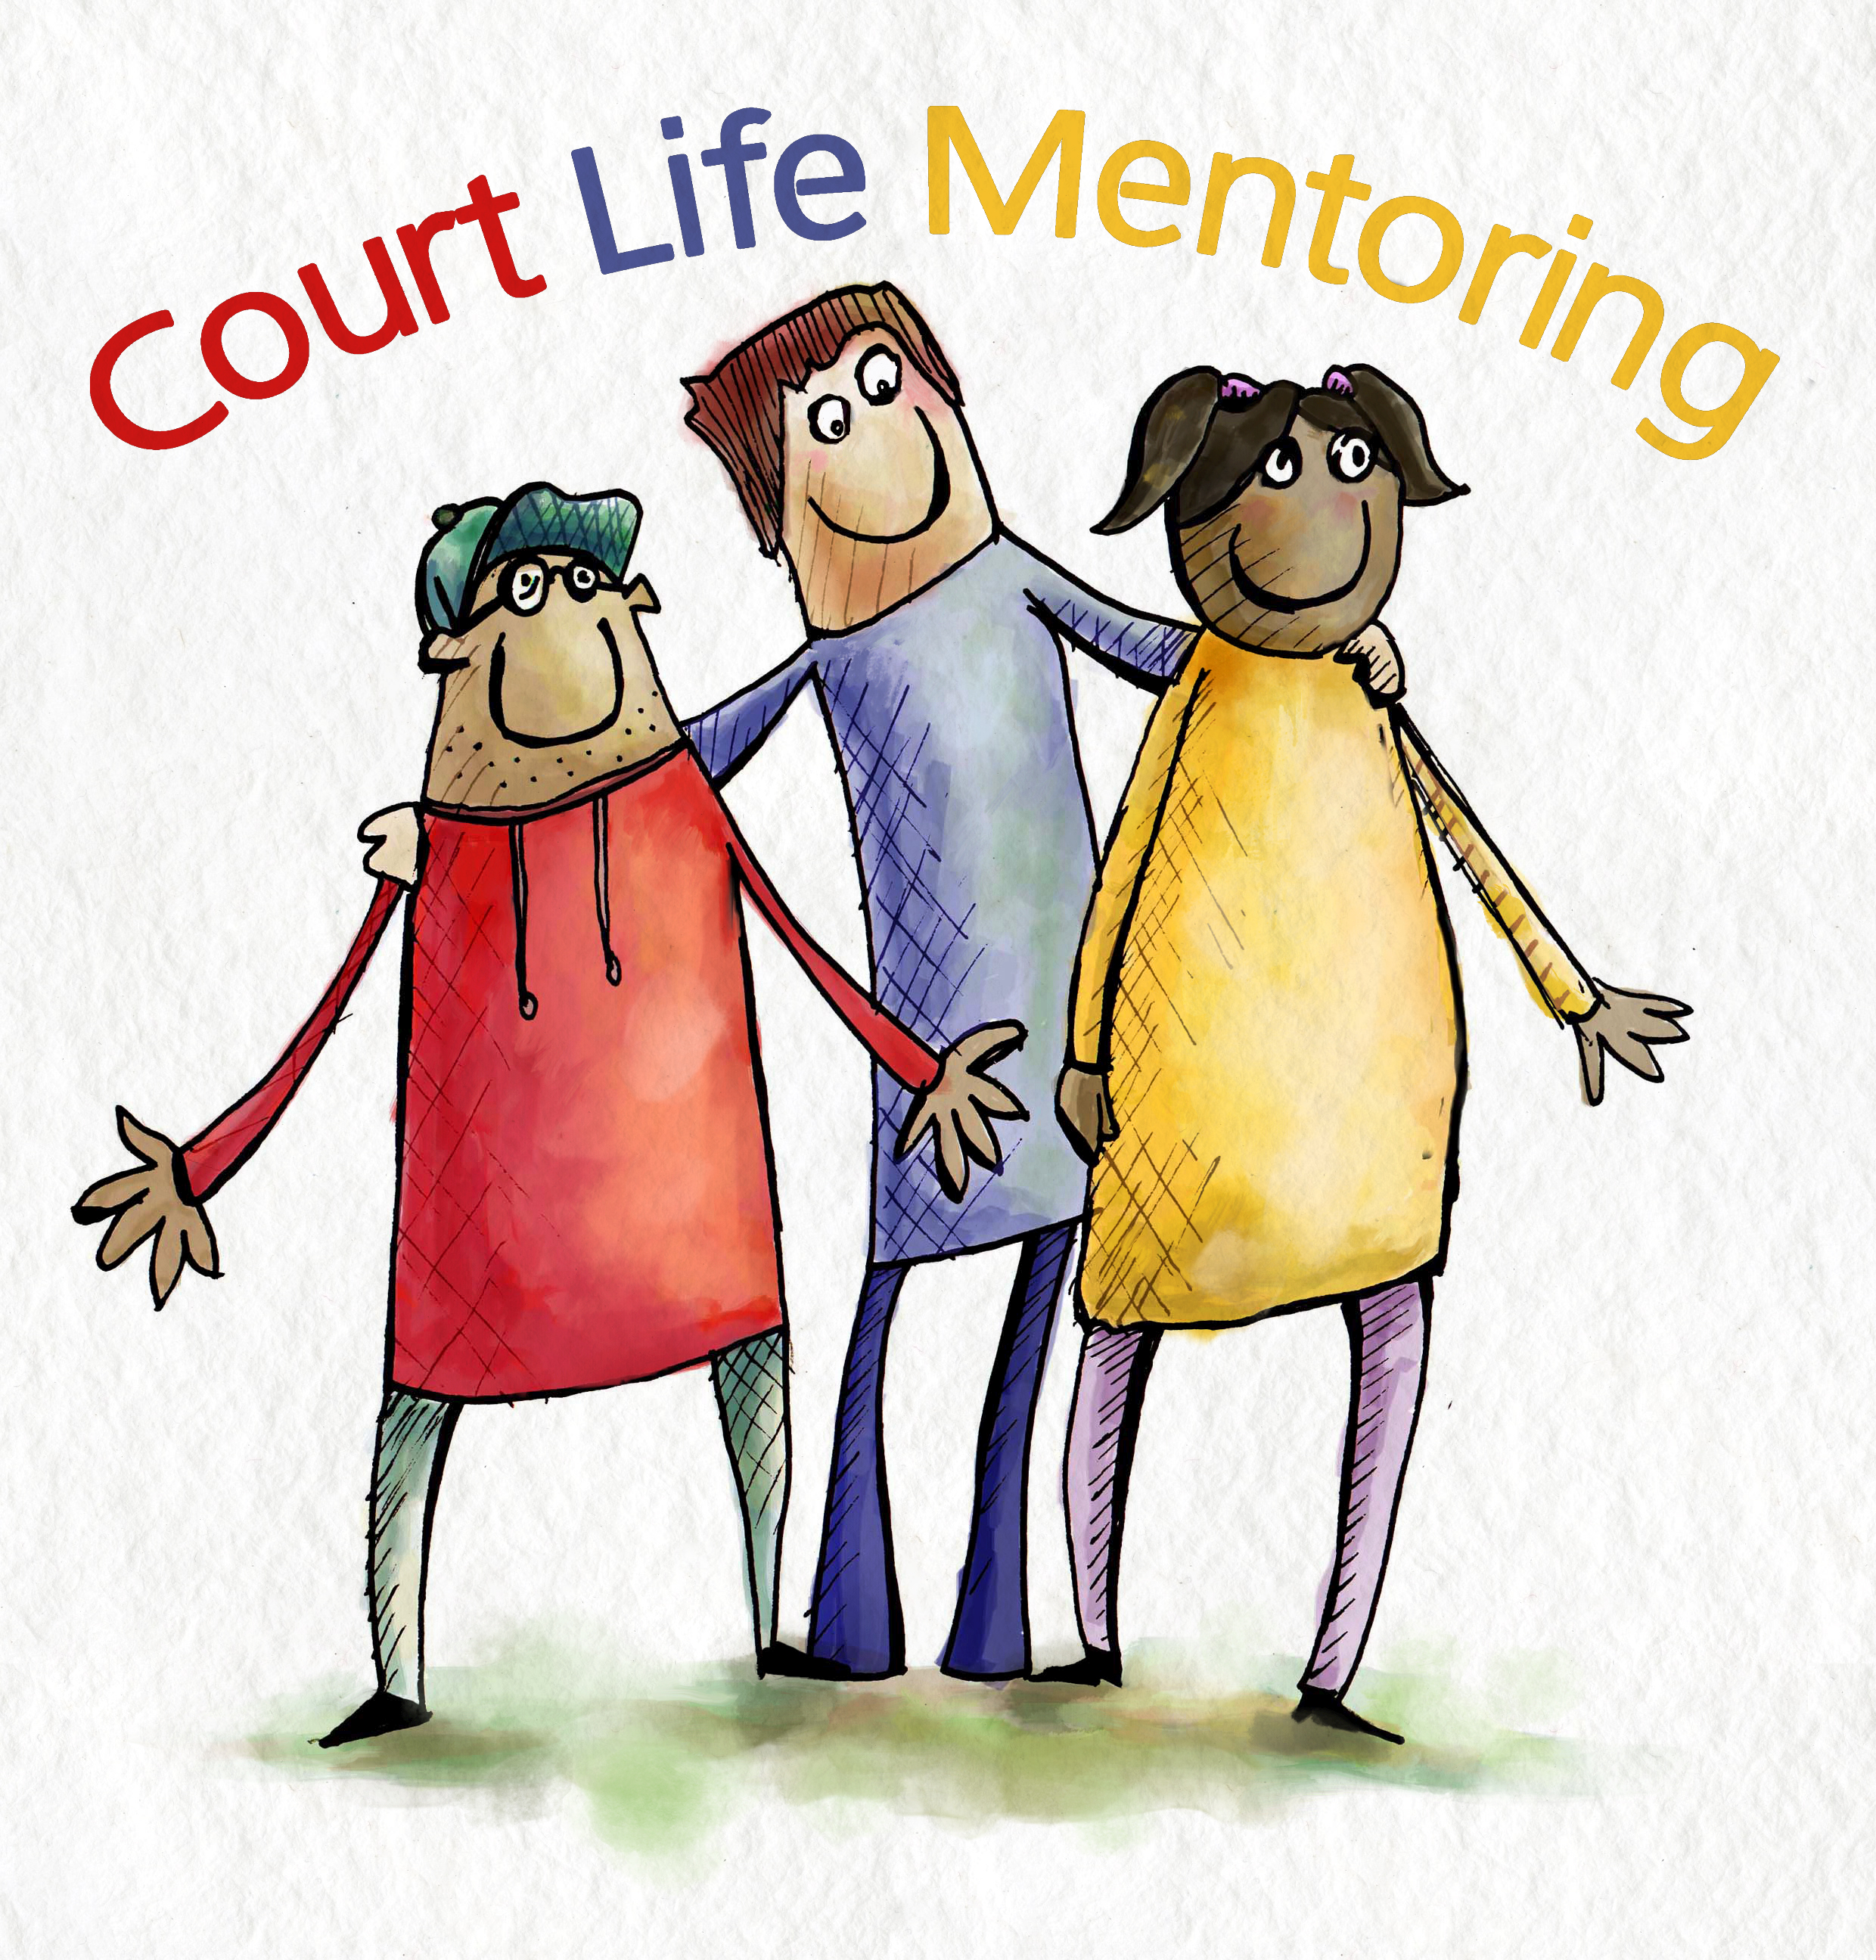 Court Life Mentoring | John Lumgair